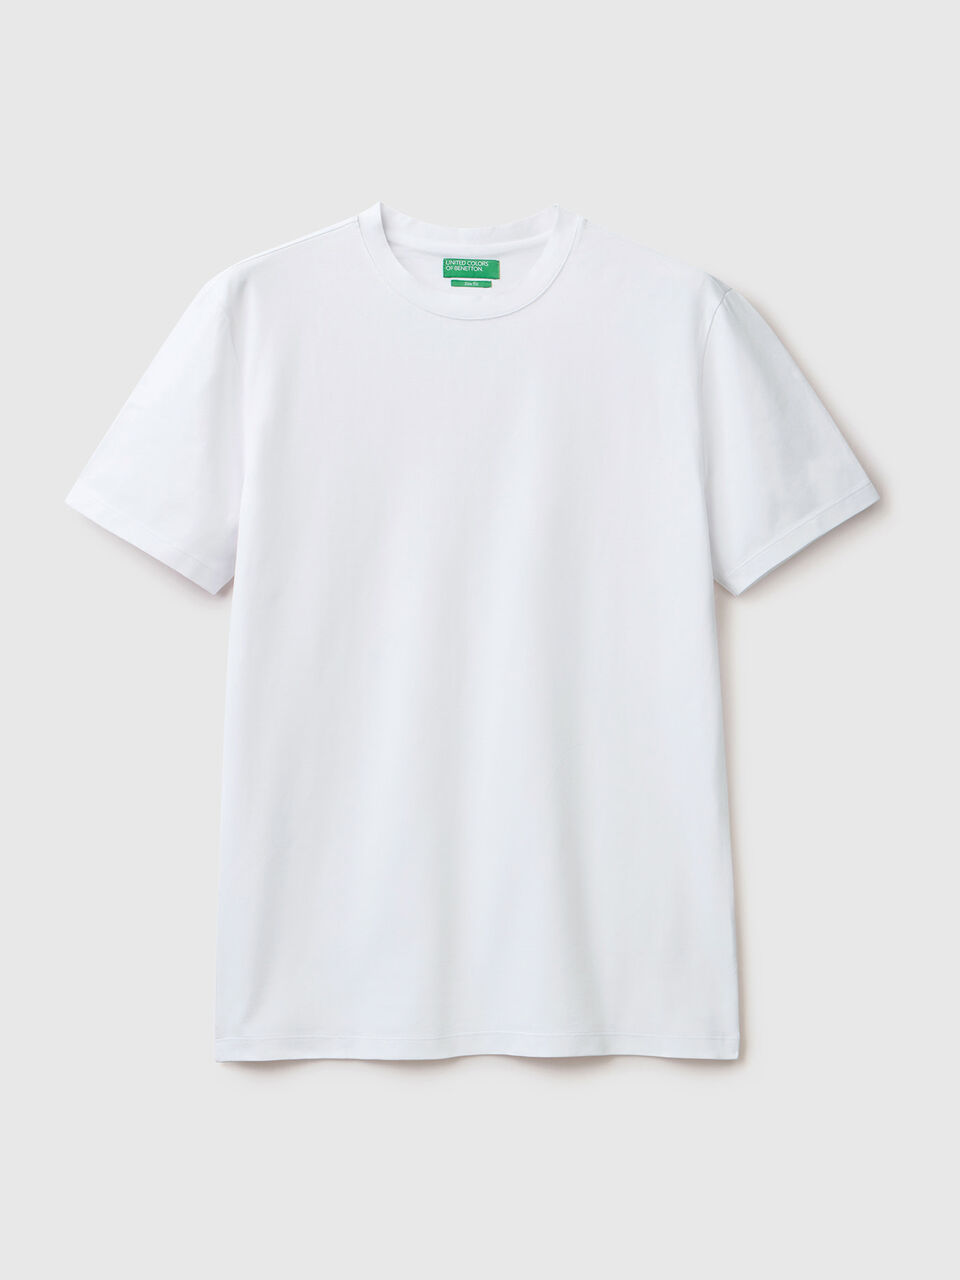 Slim fit stretch t-shirt in - Benetton White | cotton